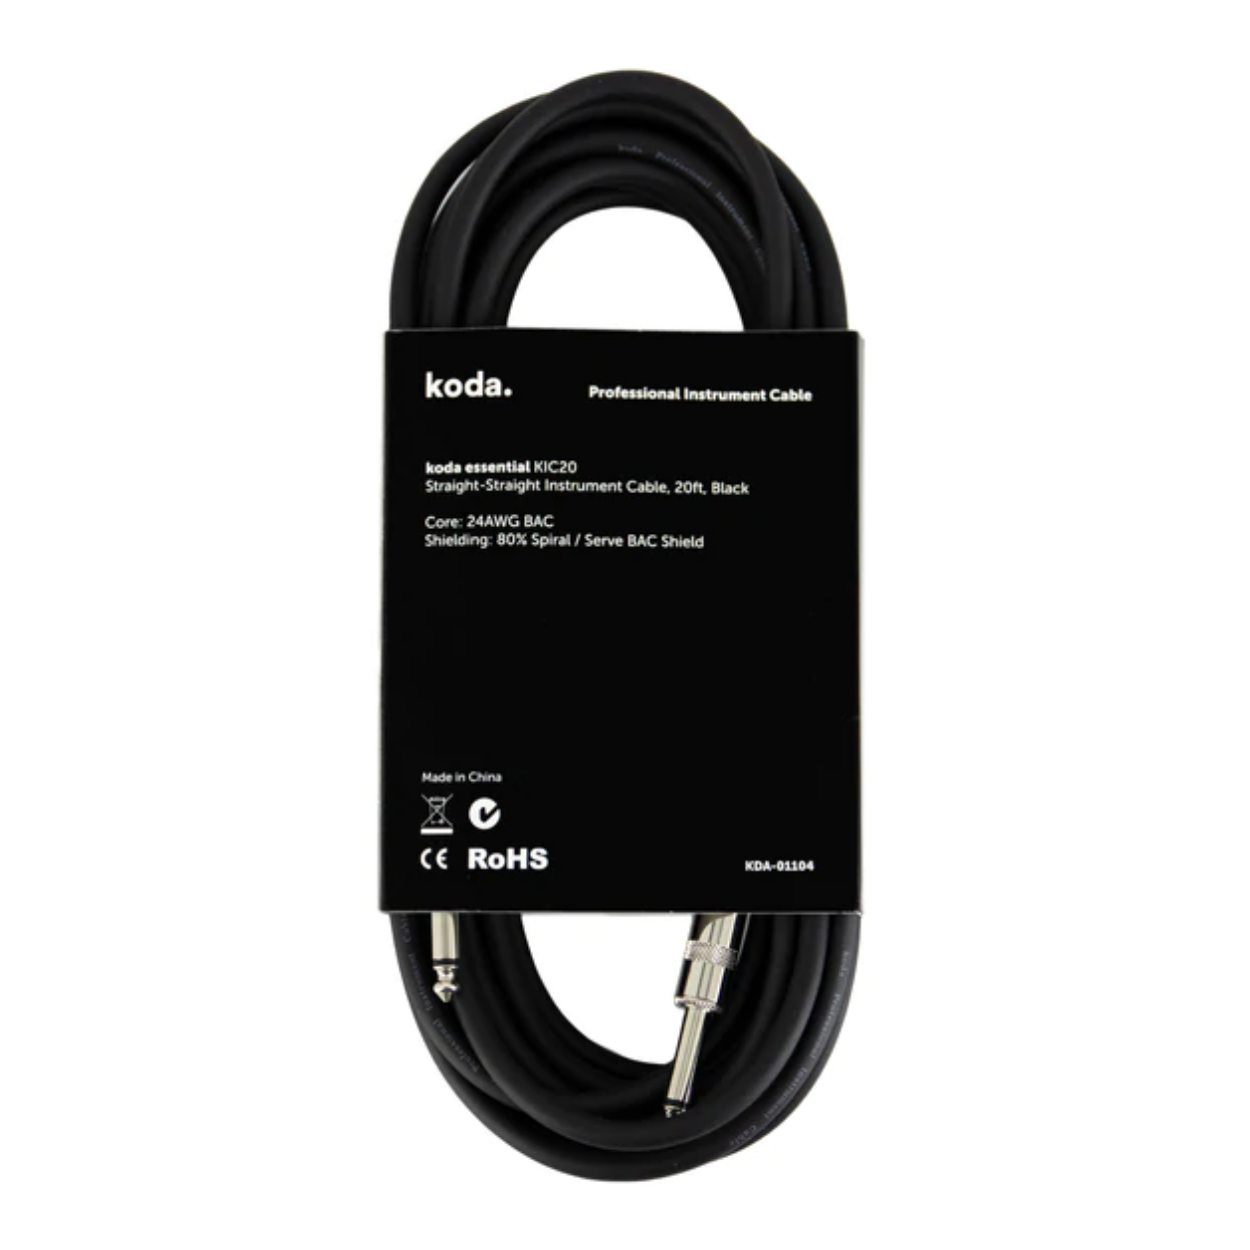 koda essential KIC20 Straight-Straight Instrument Cable, 20ft, Black